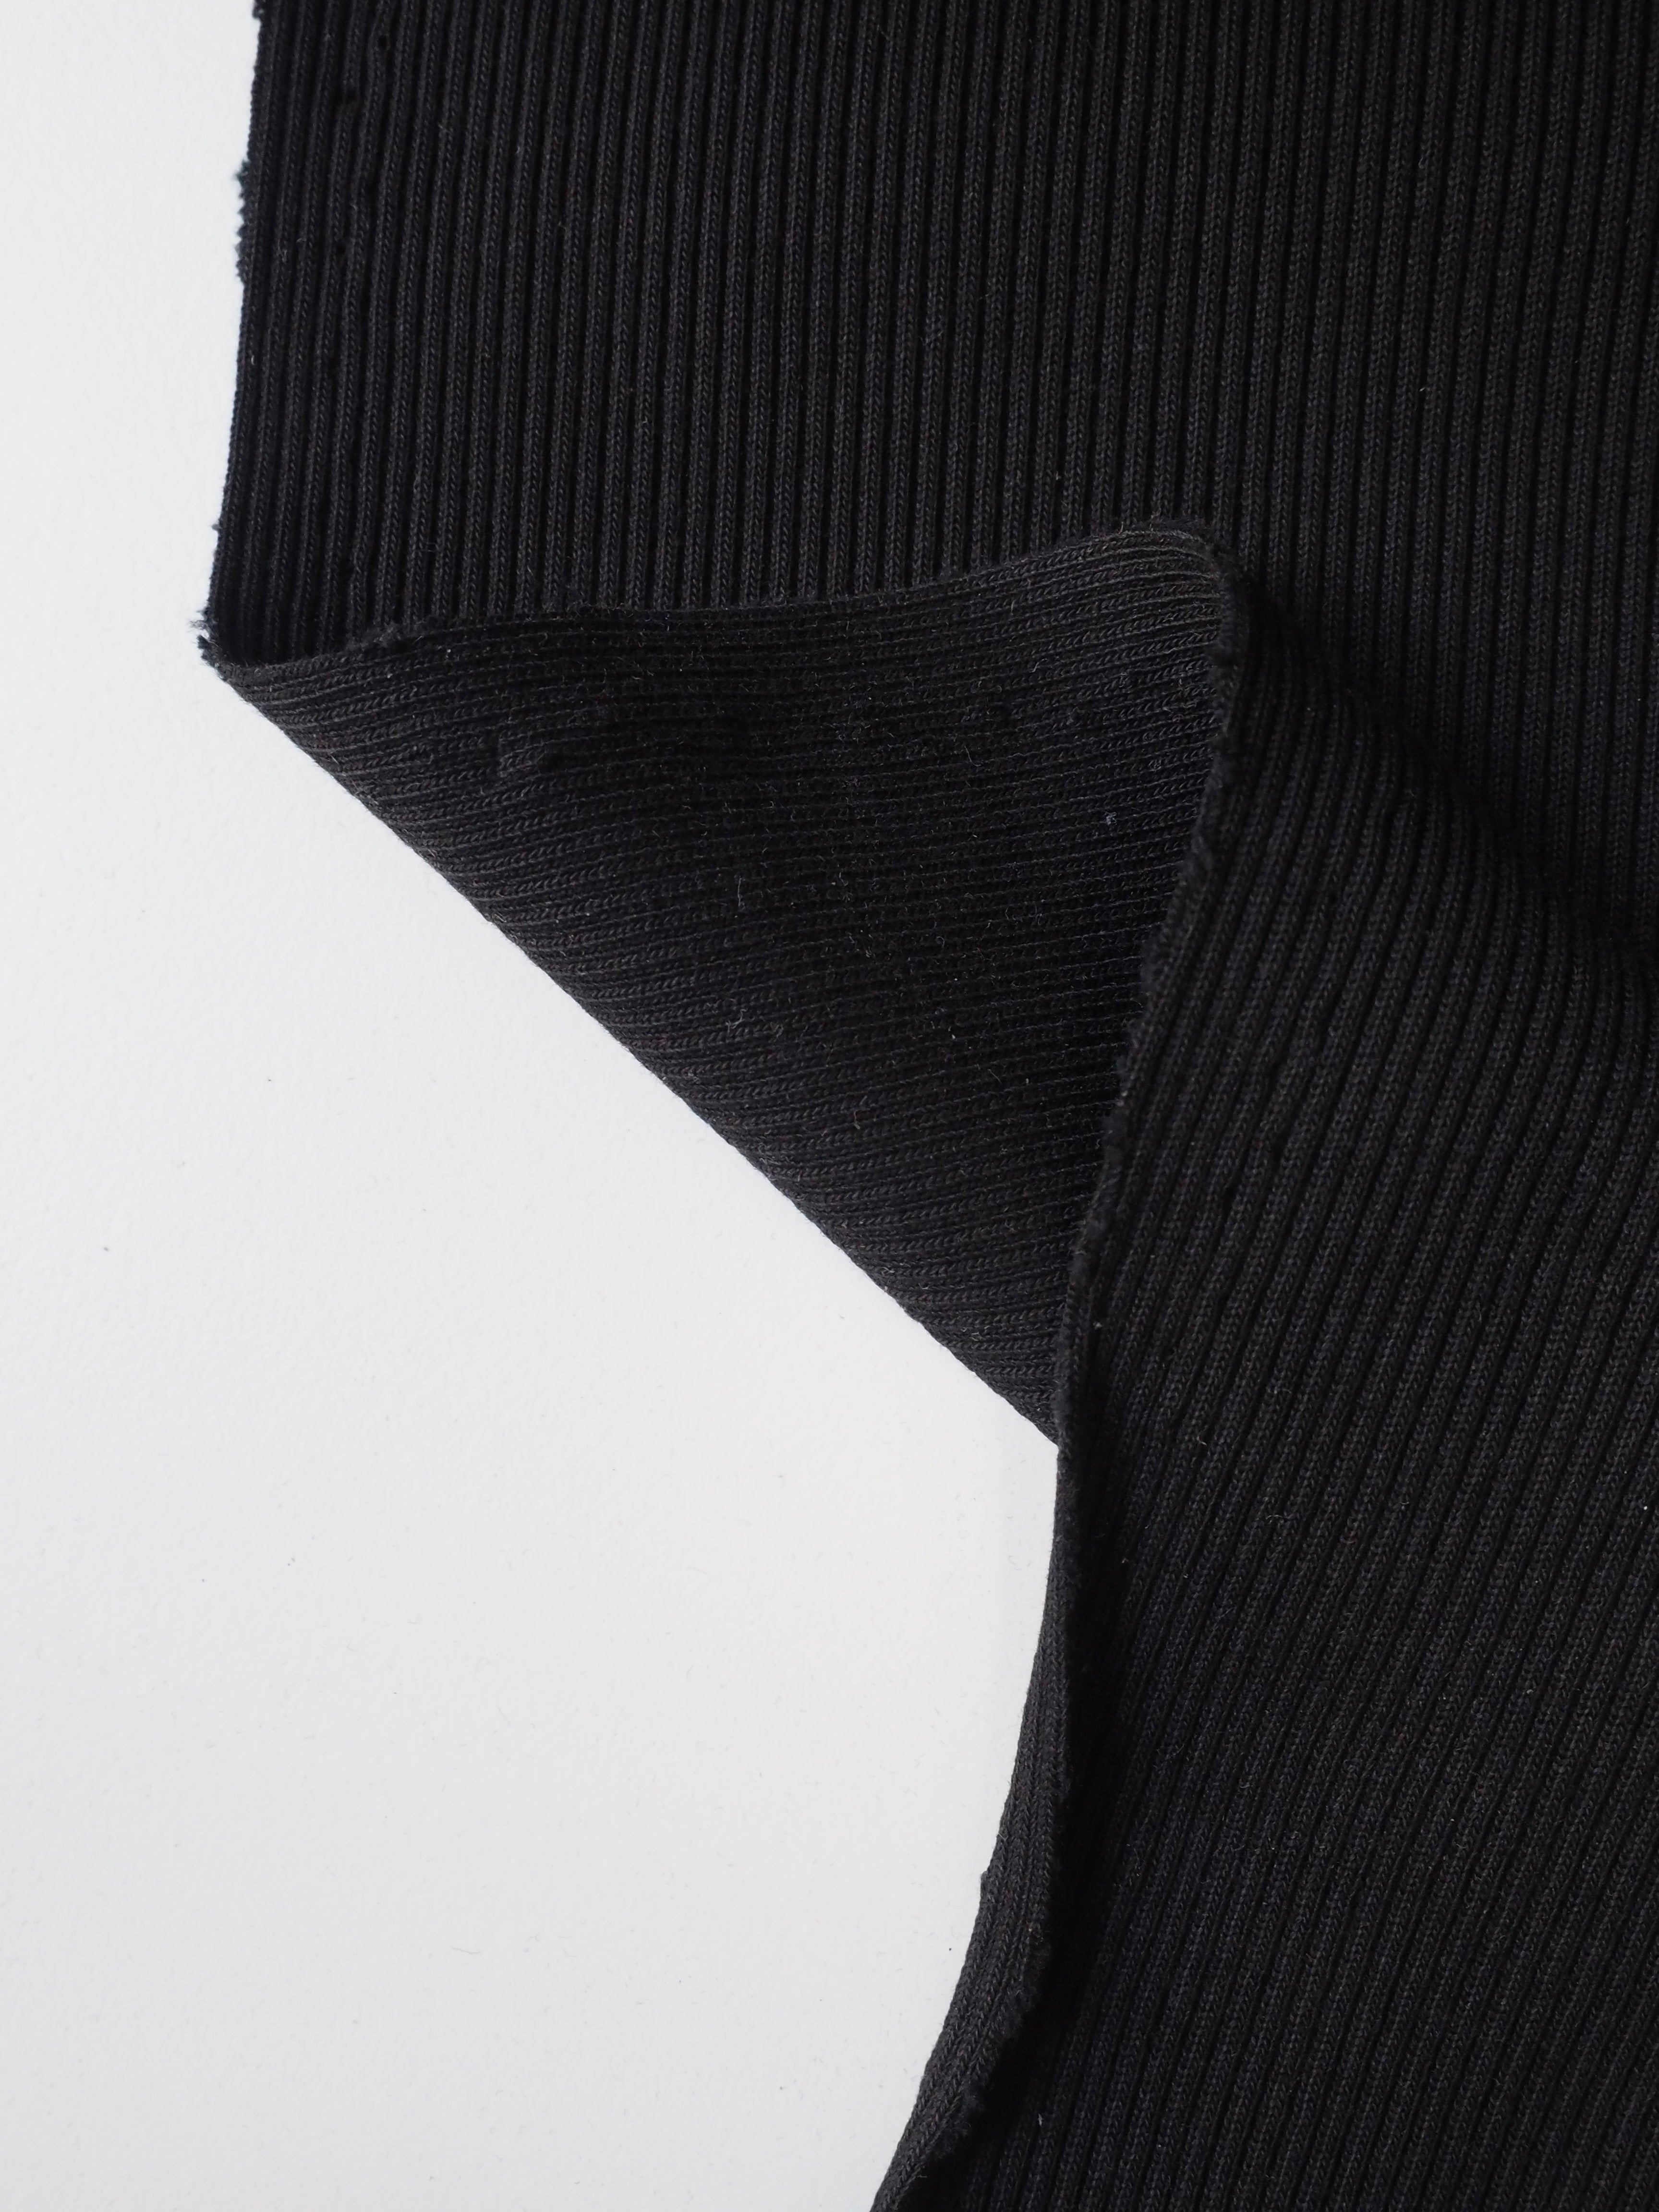 Black 2x2 Rib Knit Cotton Spandex Fabric by the Yard 360GSM 11/20 AMERICAN  MADE